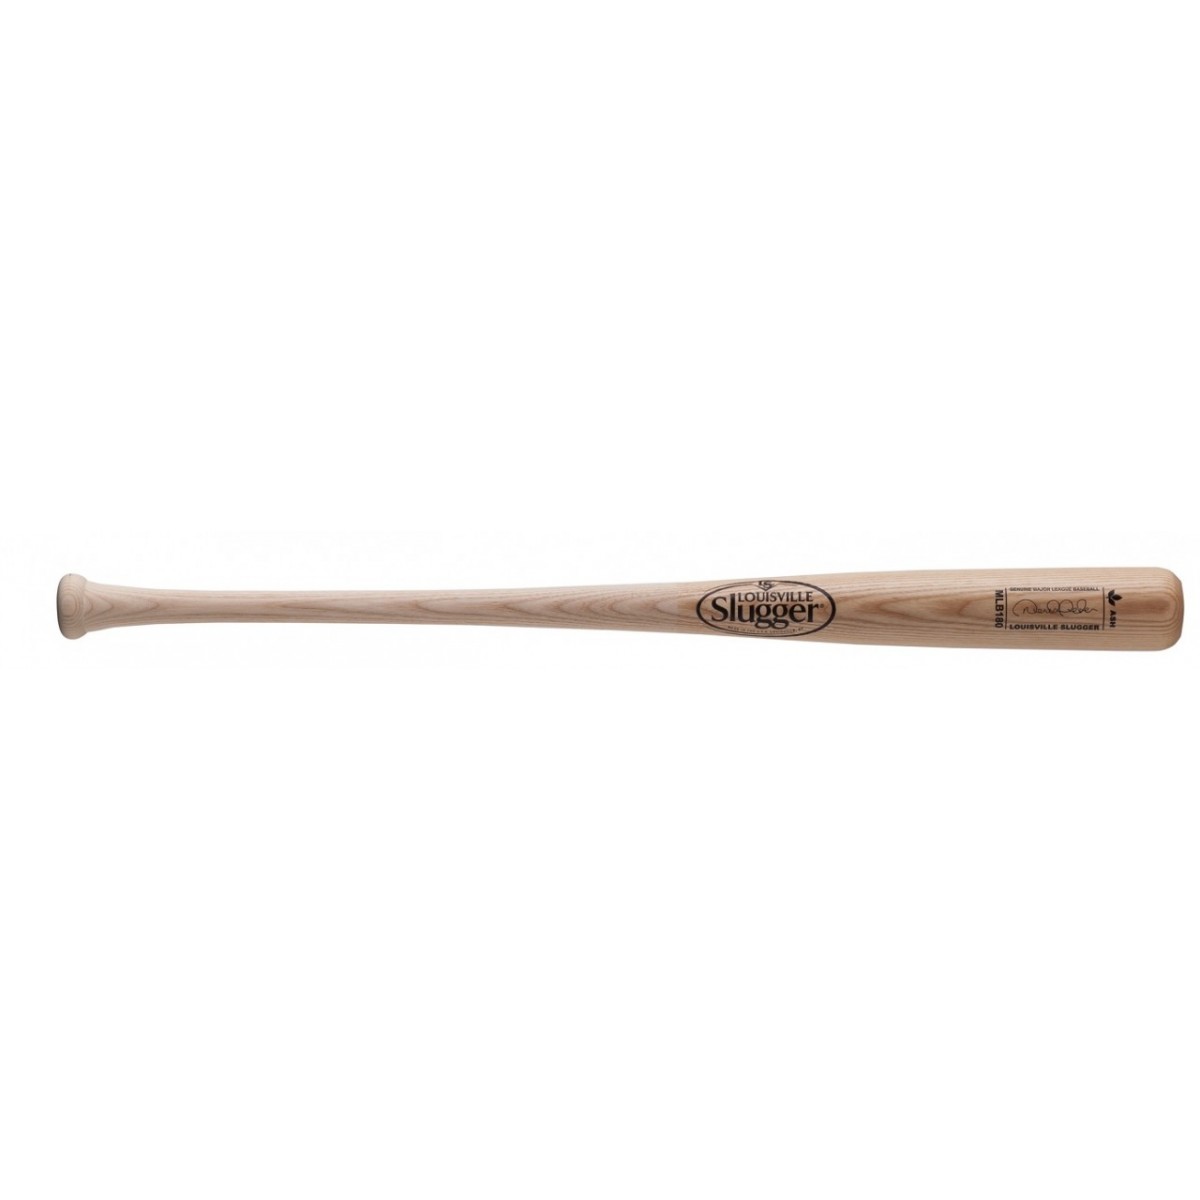 Joovon Wood Baseball Bat with Rubber Antiskid Sleeve,Wooden